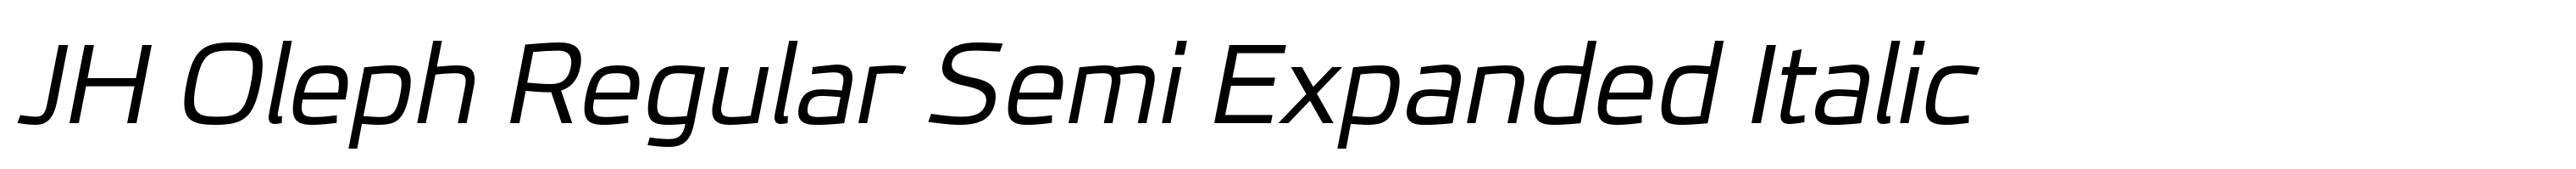 JH Oleph Regular Semi Expanded Italic